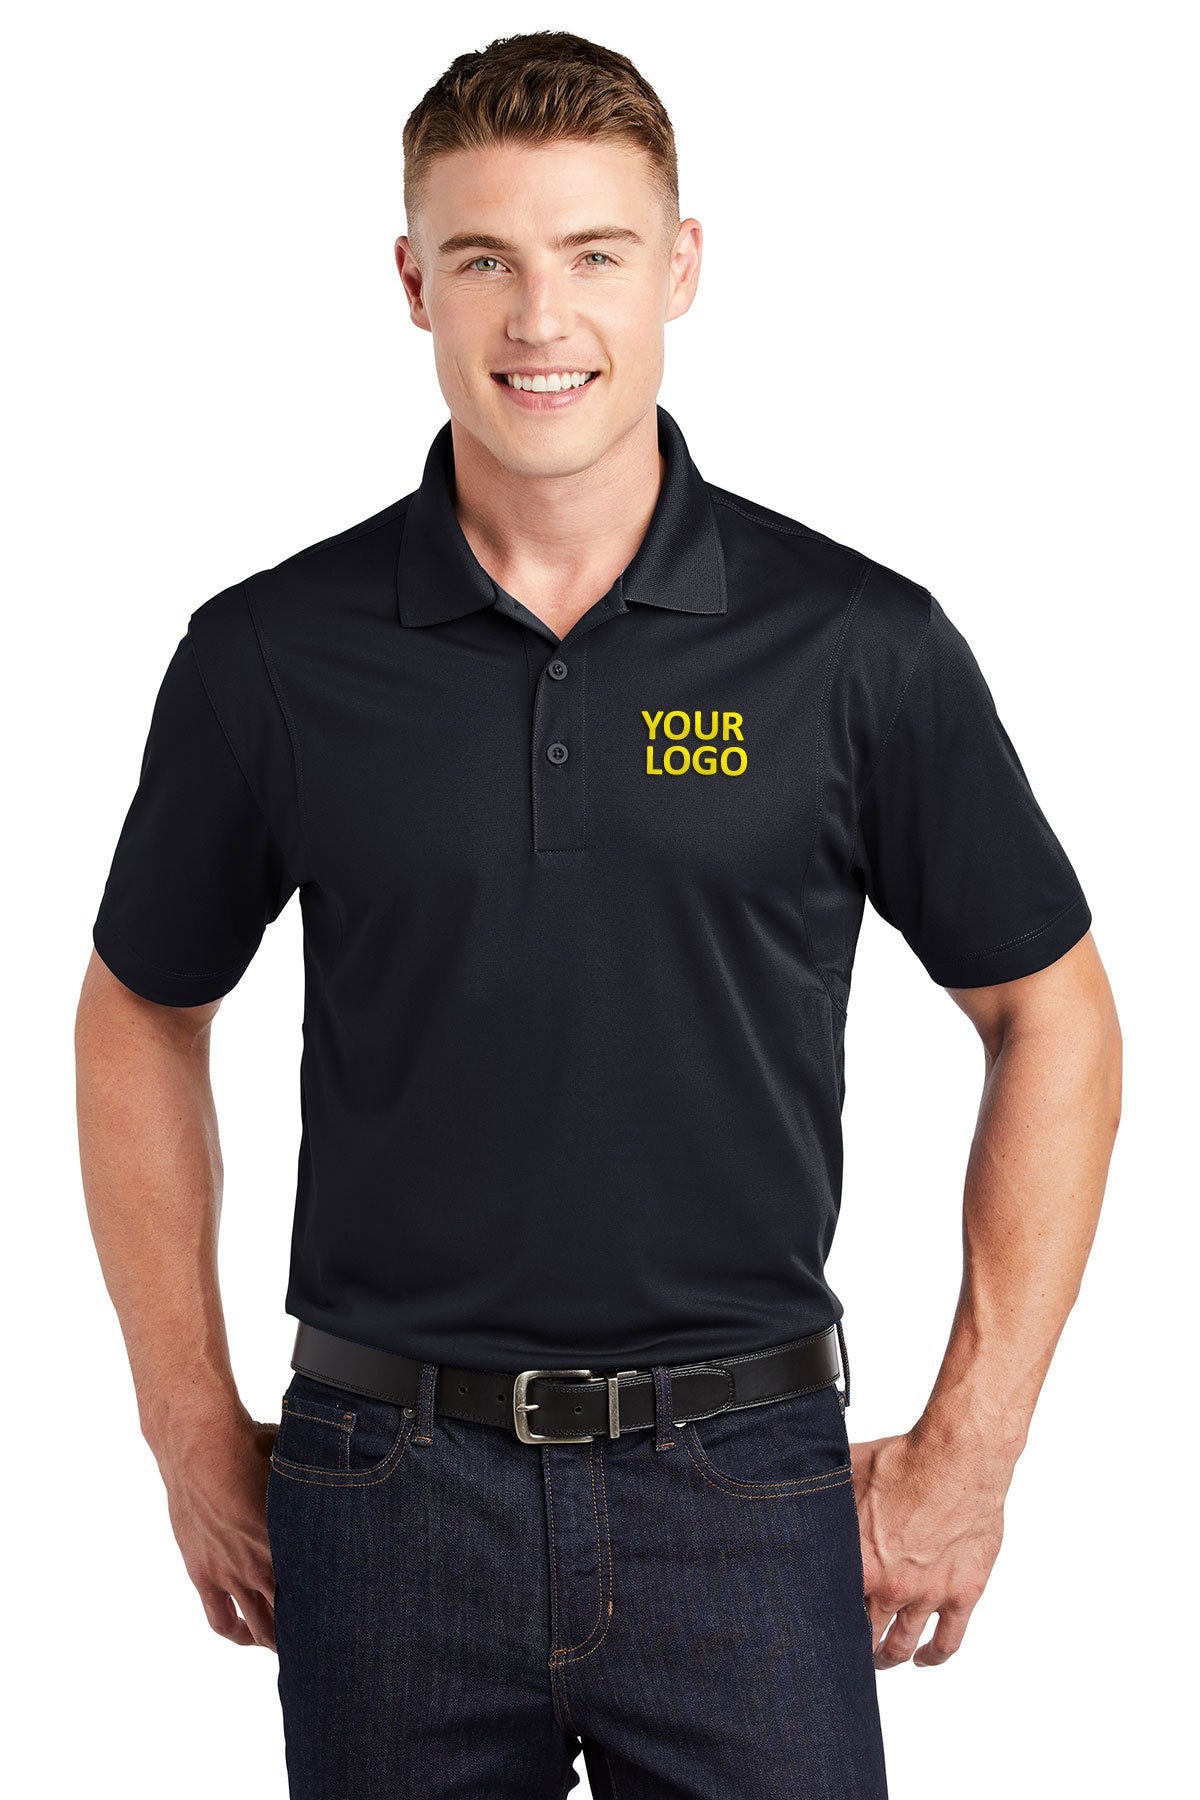 Sport-Tek Black TST650 business polo shirts embroidered